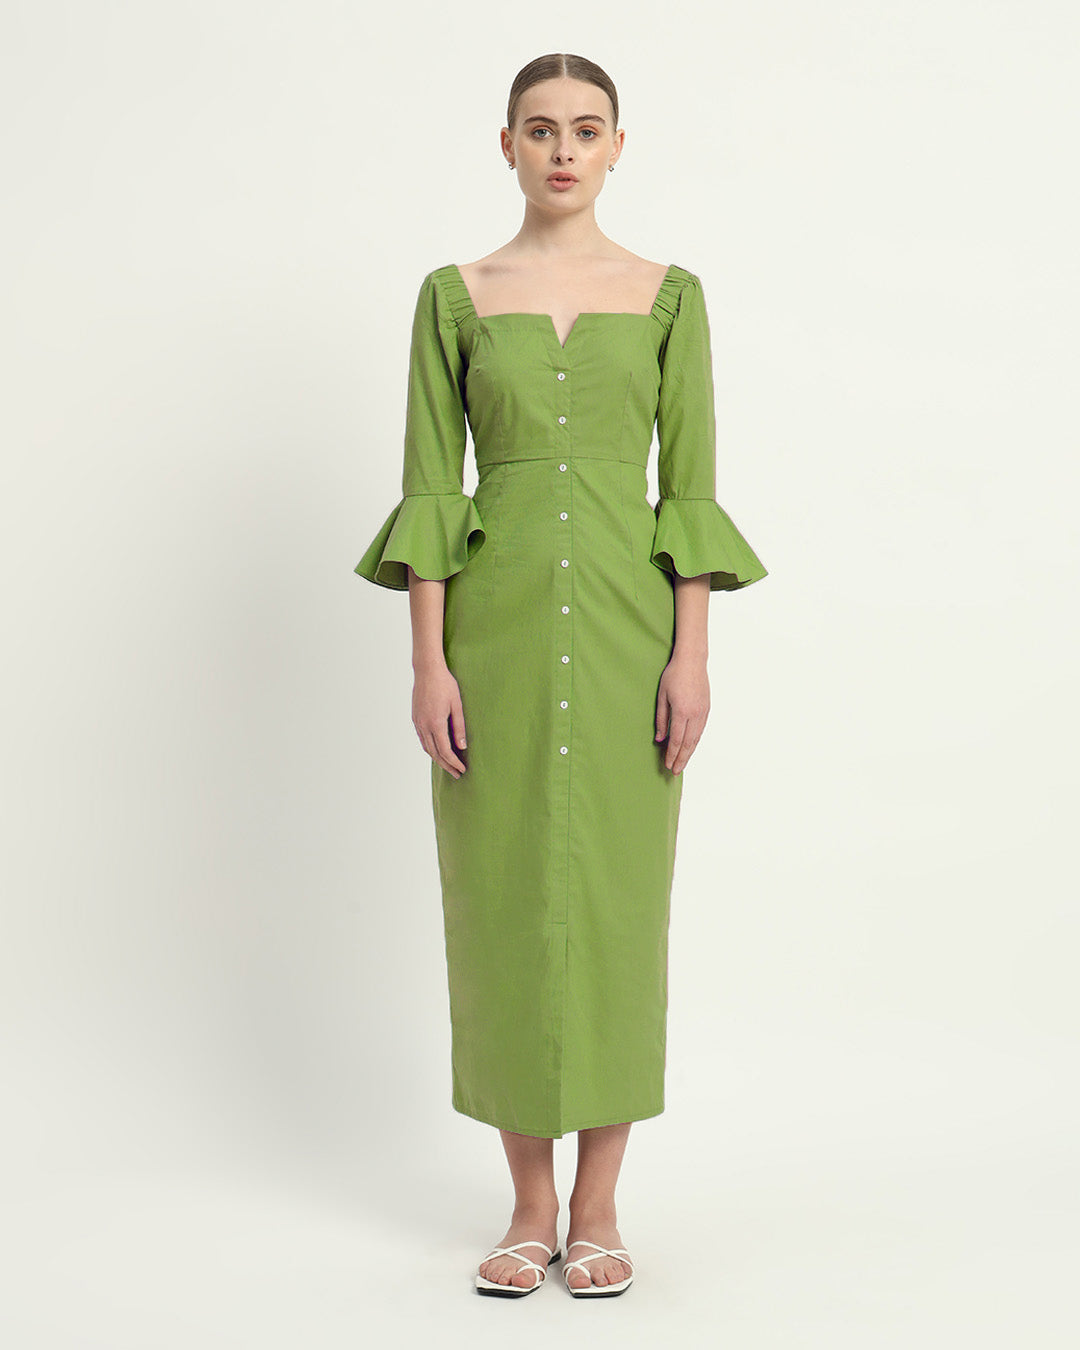 The Fern Rosendale Cotton Dress